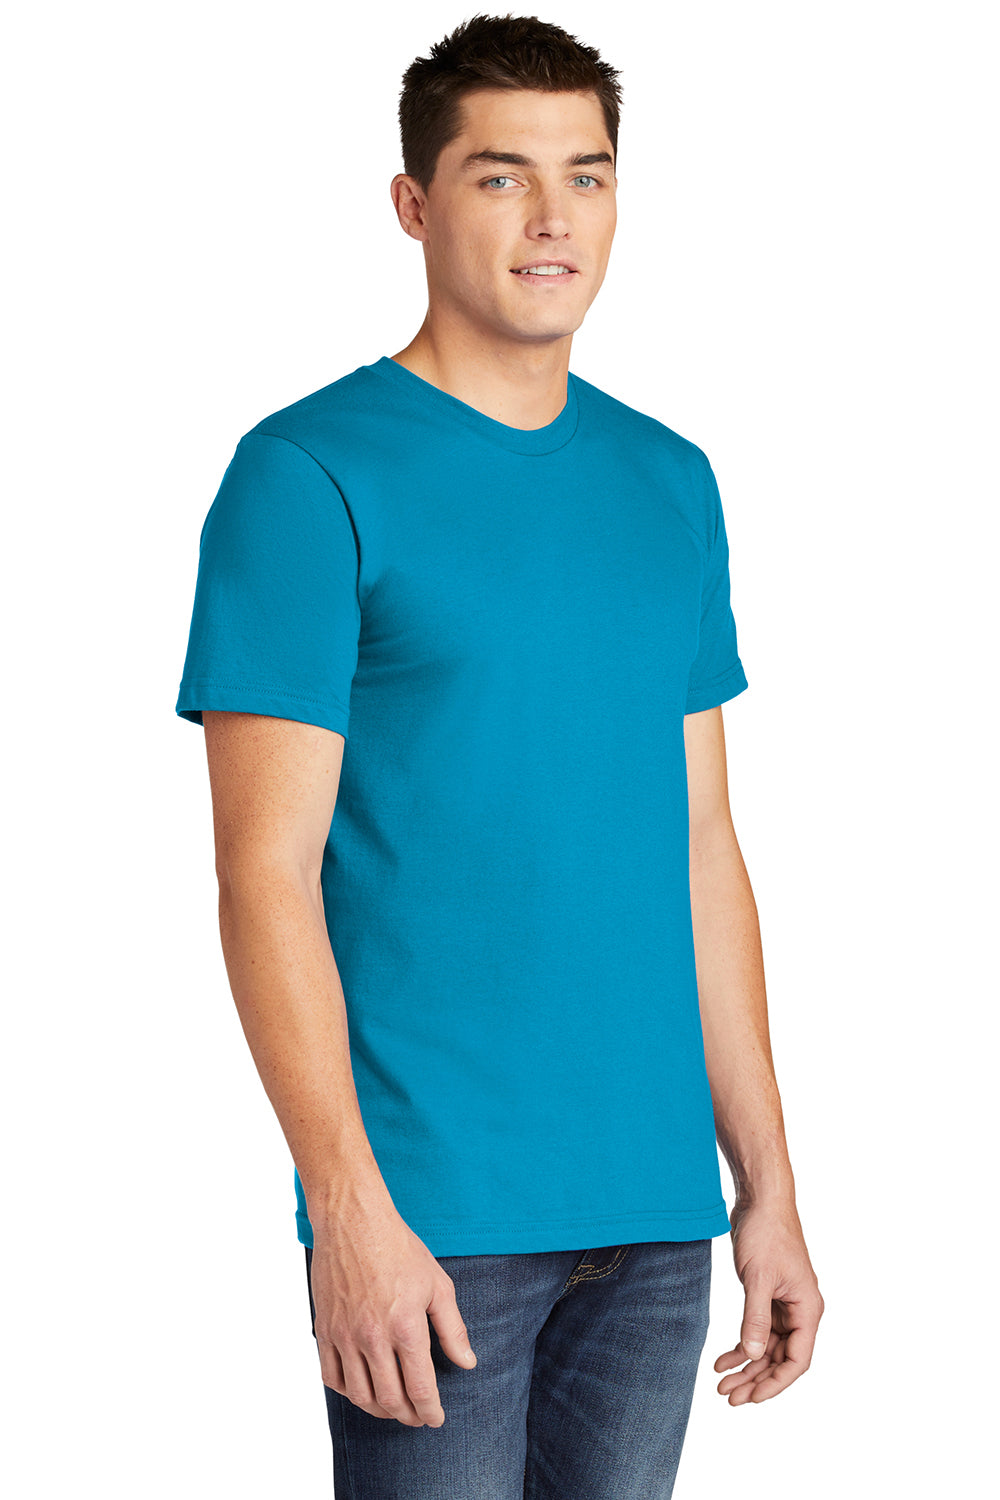 American Apparel 2001 Mens Fine Jersey Short Sleeve Crewneck T-Shirt Teal Blue Model 3Q